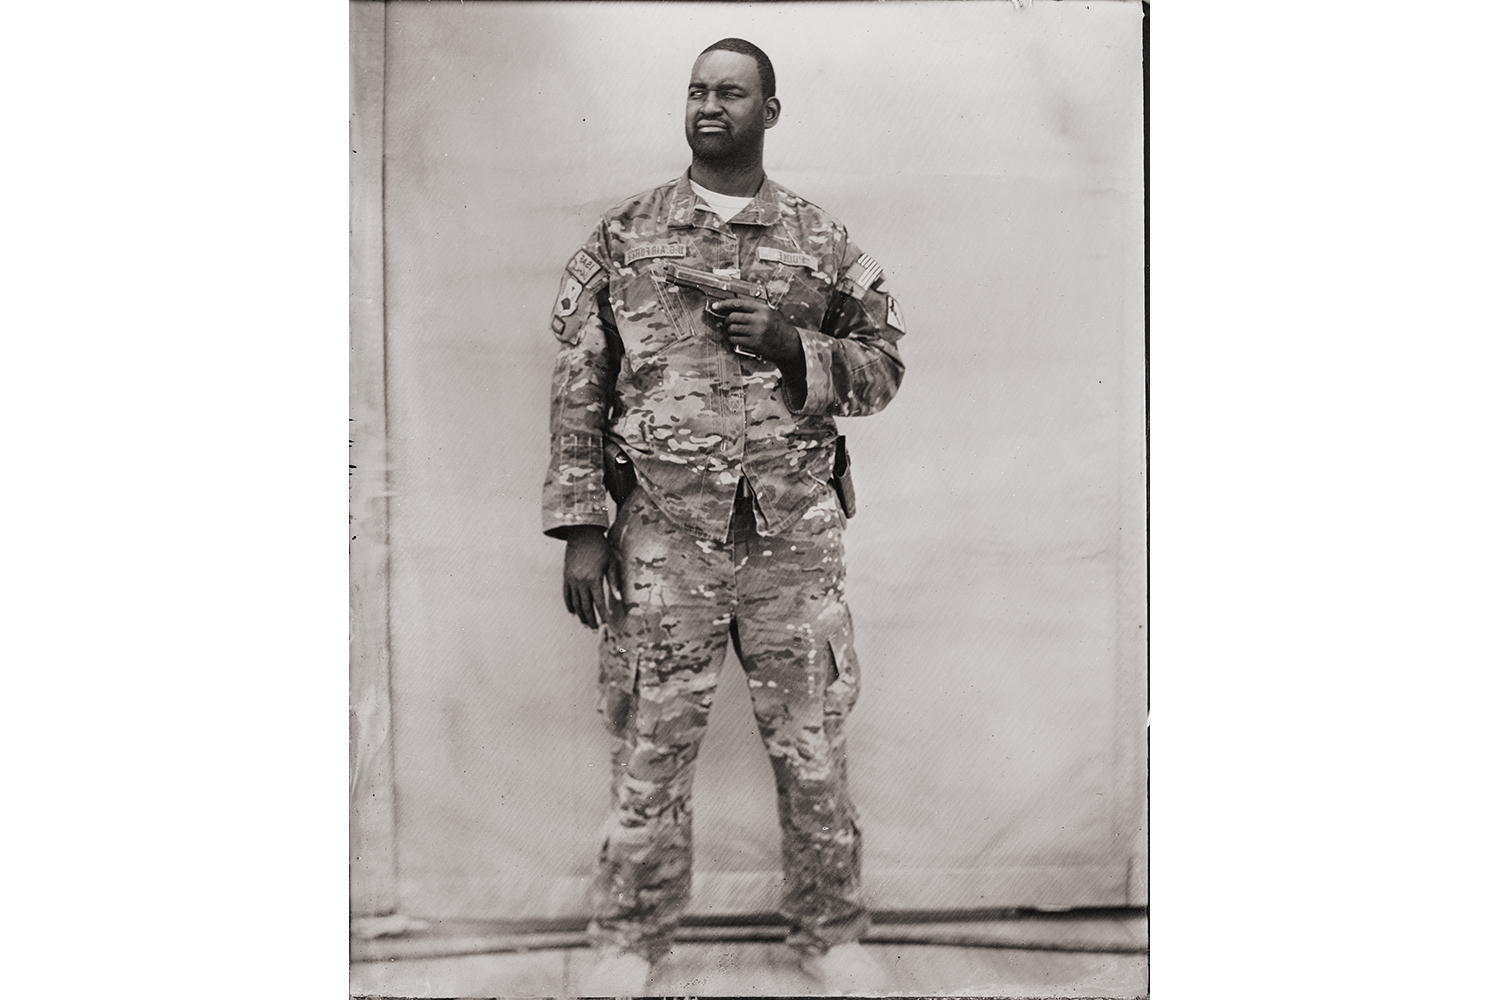 Ed Drew’s tintype series of US soldiers